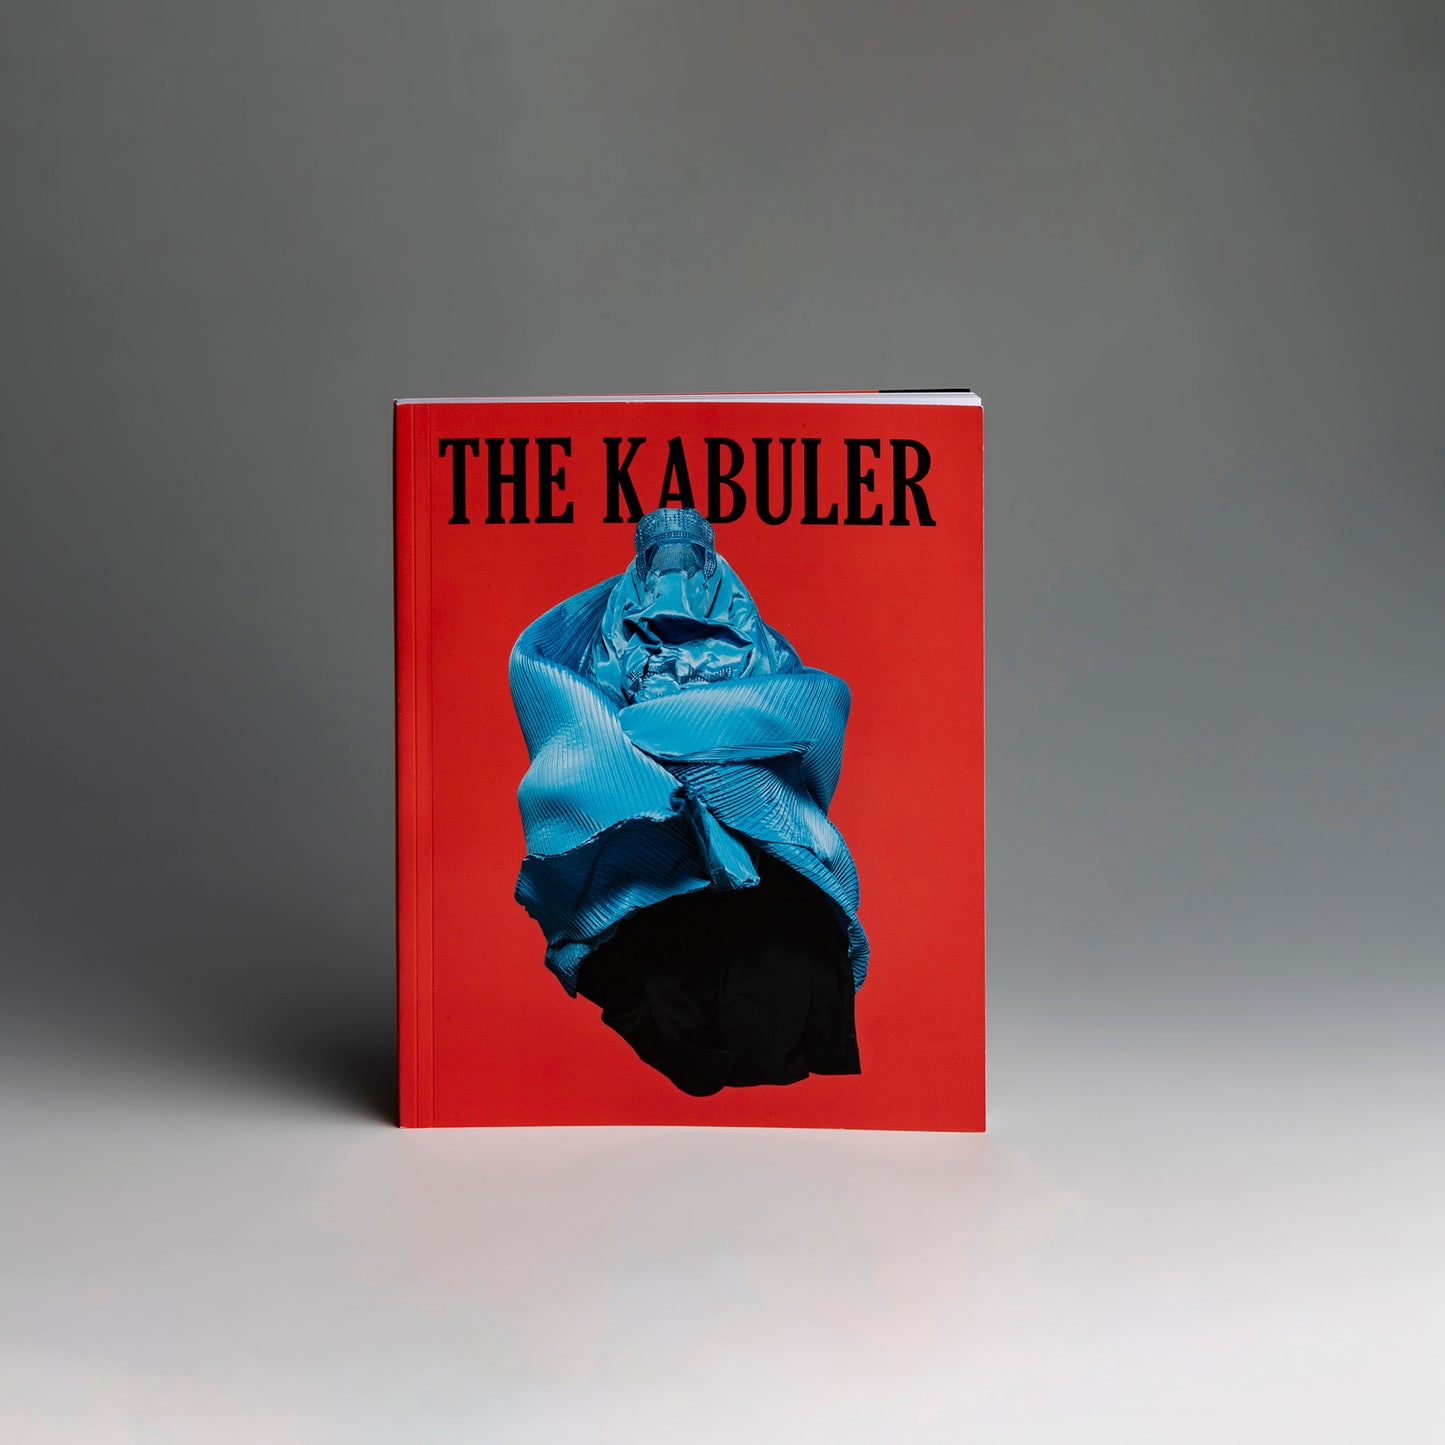 The Kabuler by Cristina De Middel & Lorenzo Meloni